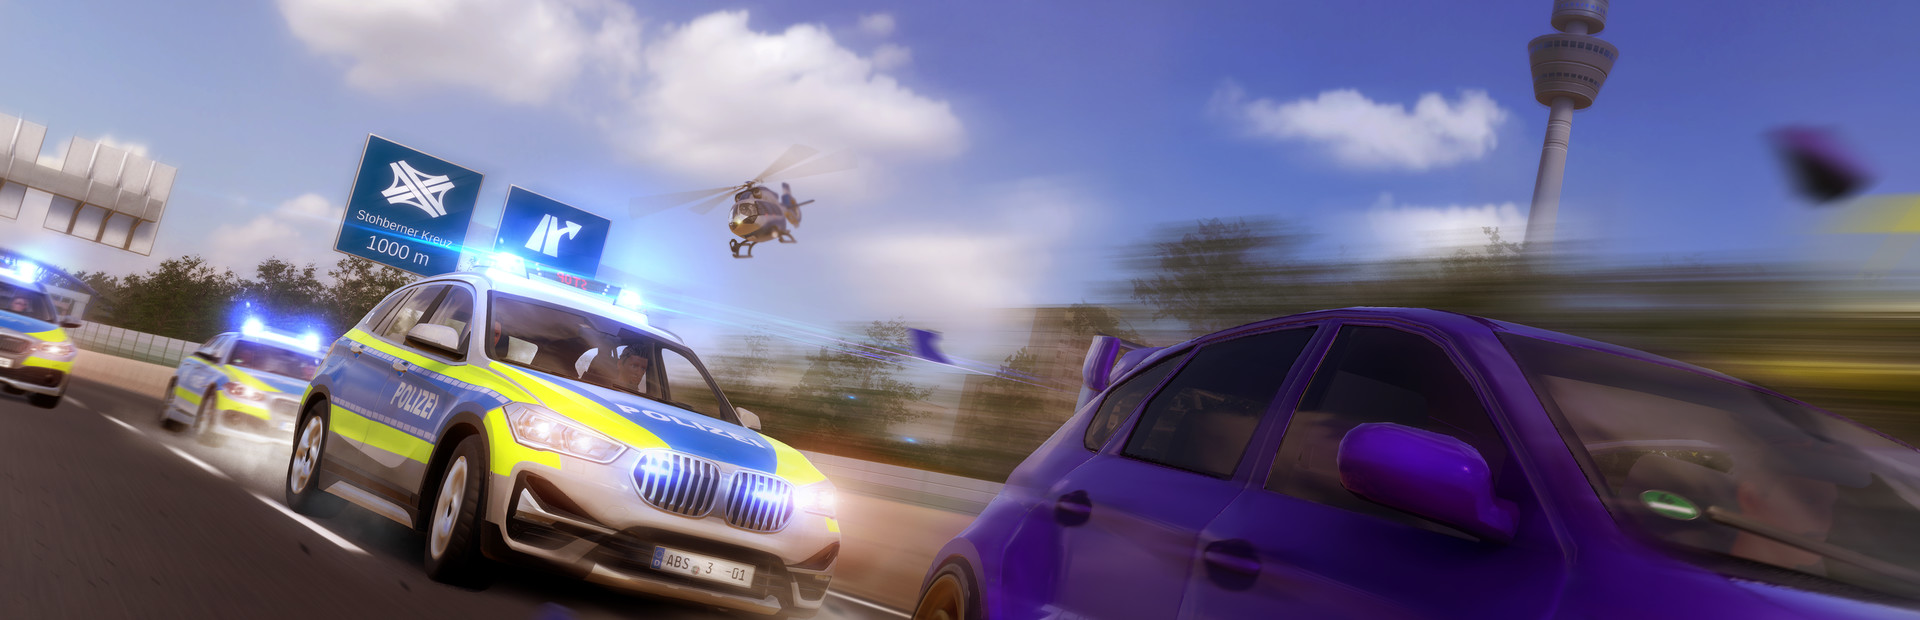 Autobahn Police Simulator 3 cover image